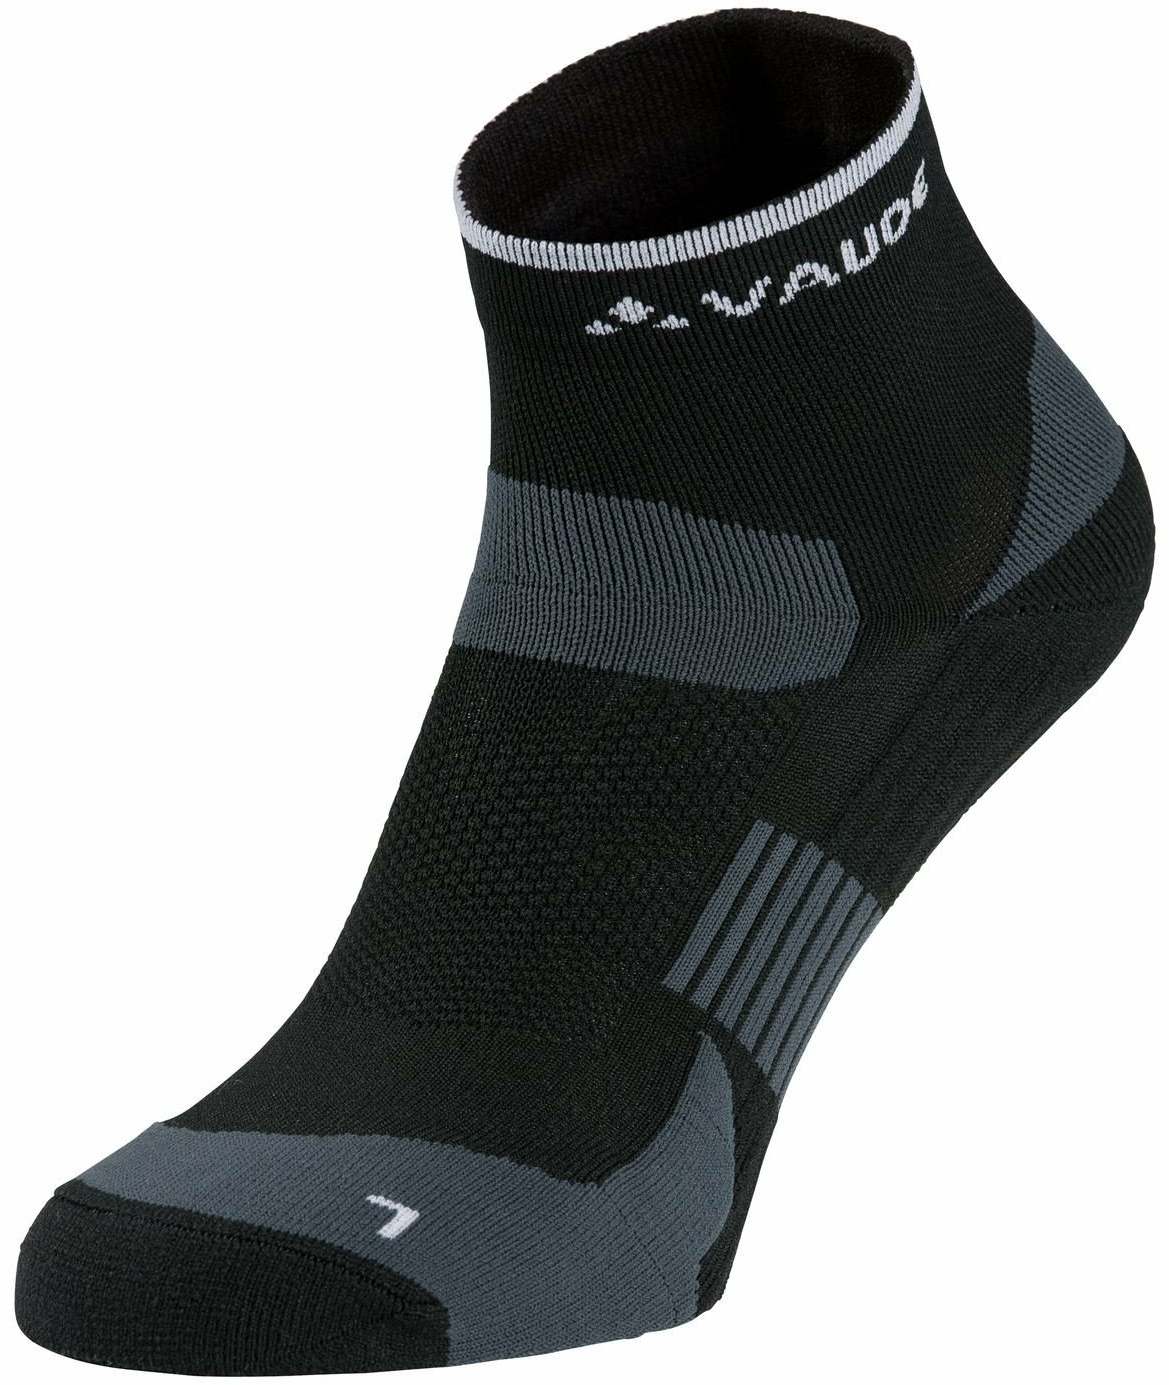 Bekleidung/Socken: Vaude VAUDE Socke für Radsport Bike Socks Short 39-41 